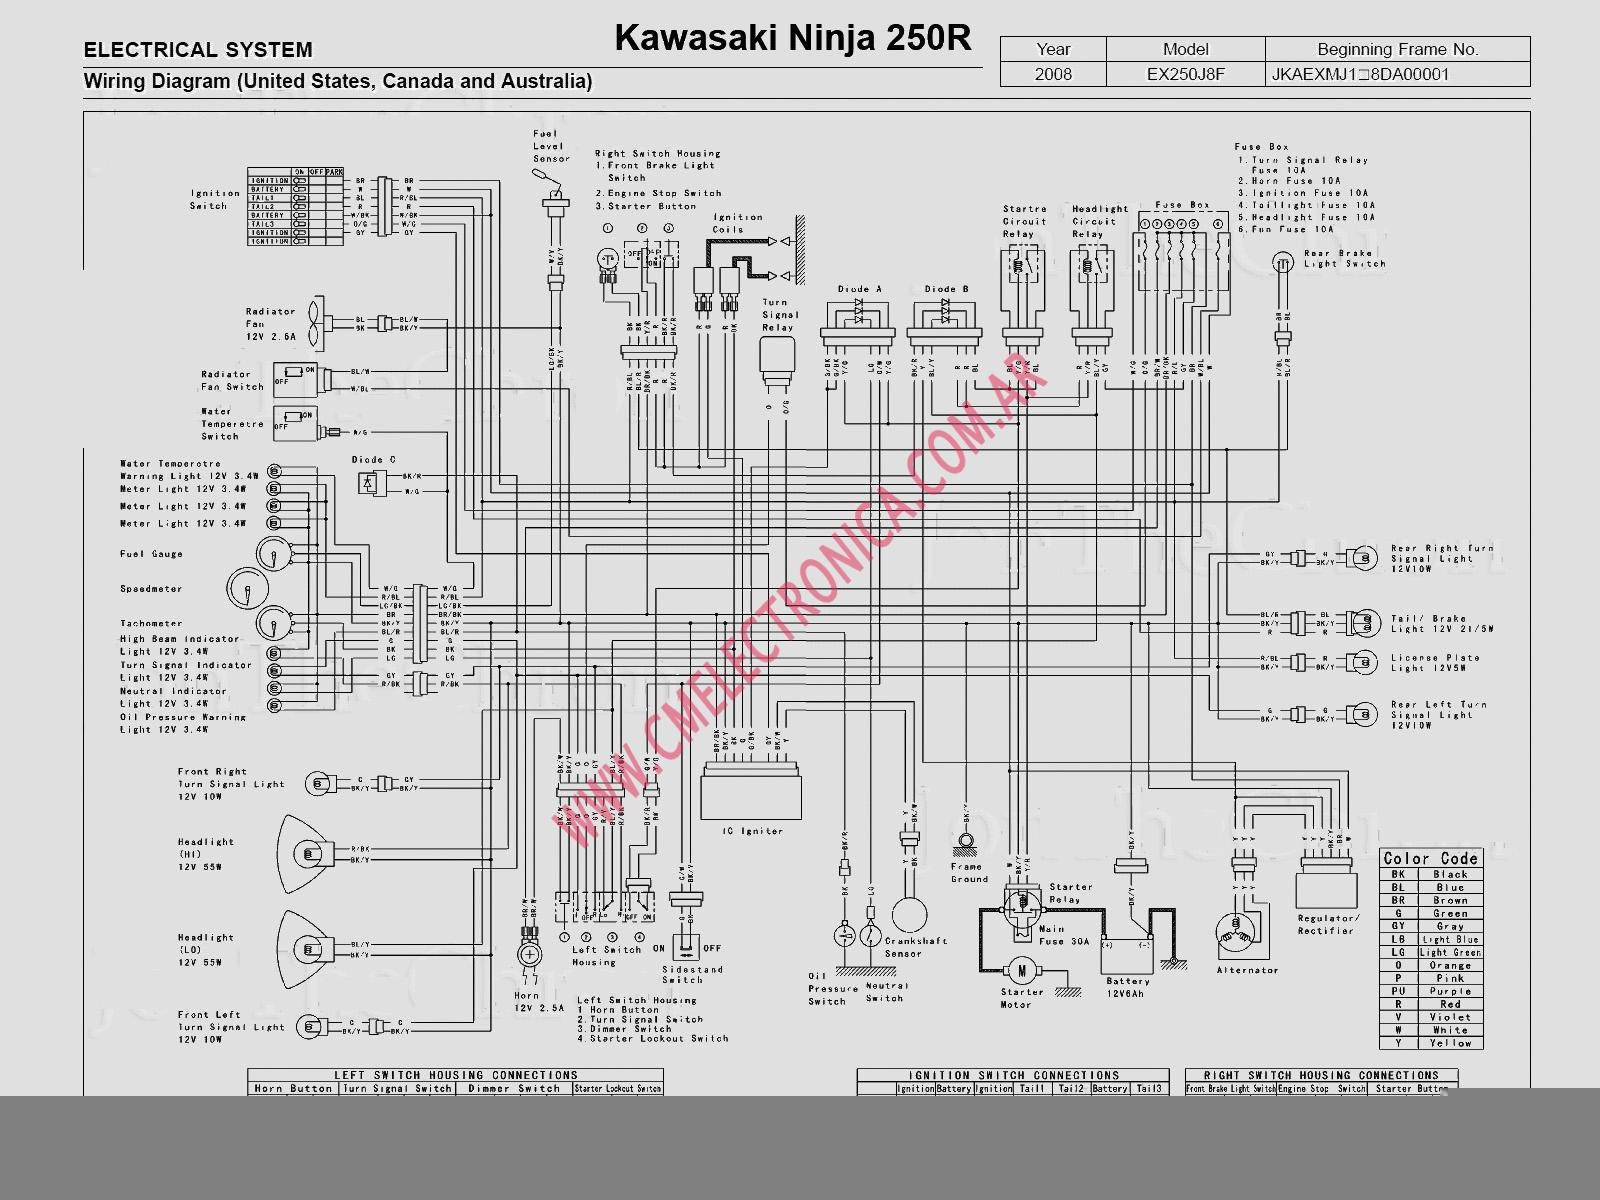 How To Fix The Wiring Harness Kawasaki Ninja 250r R Full Diagram Here Ninjetteorg